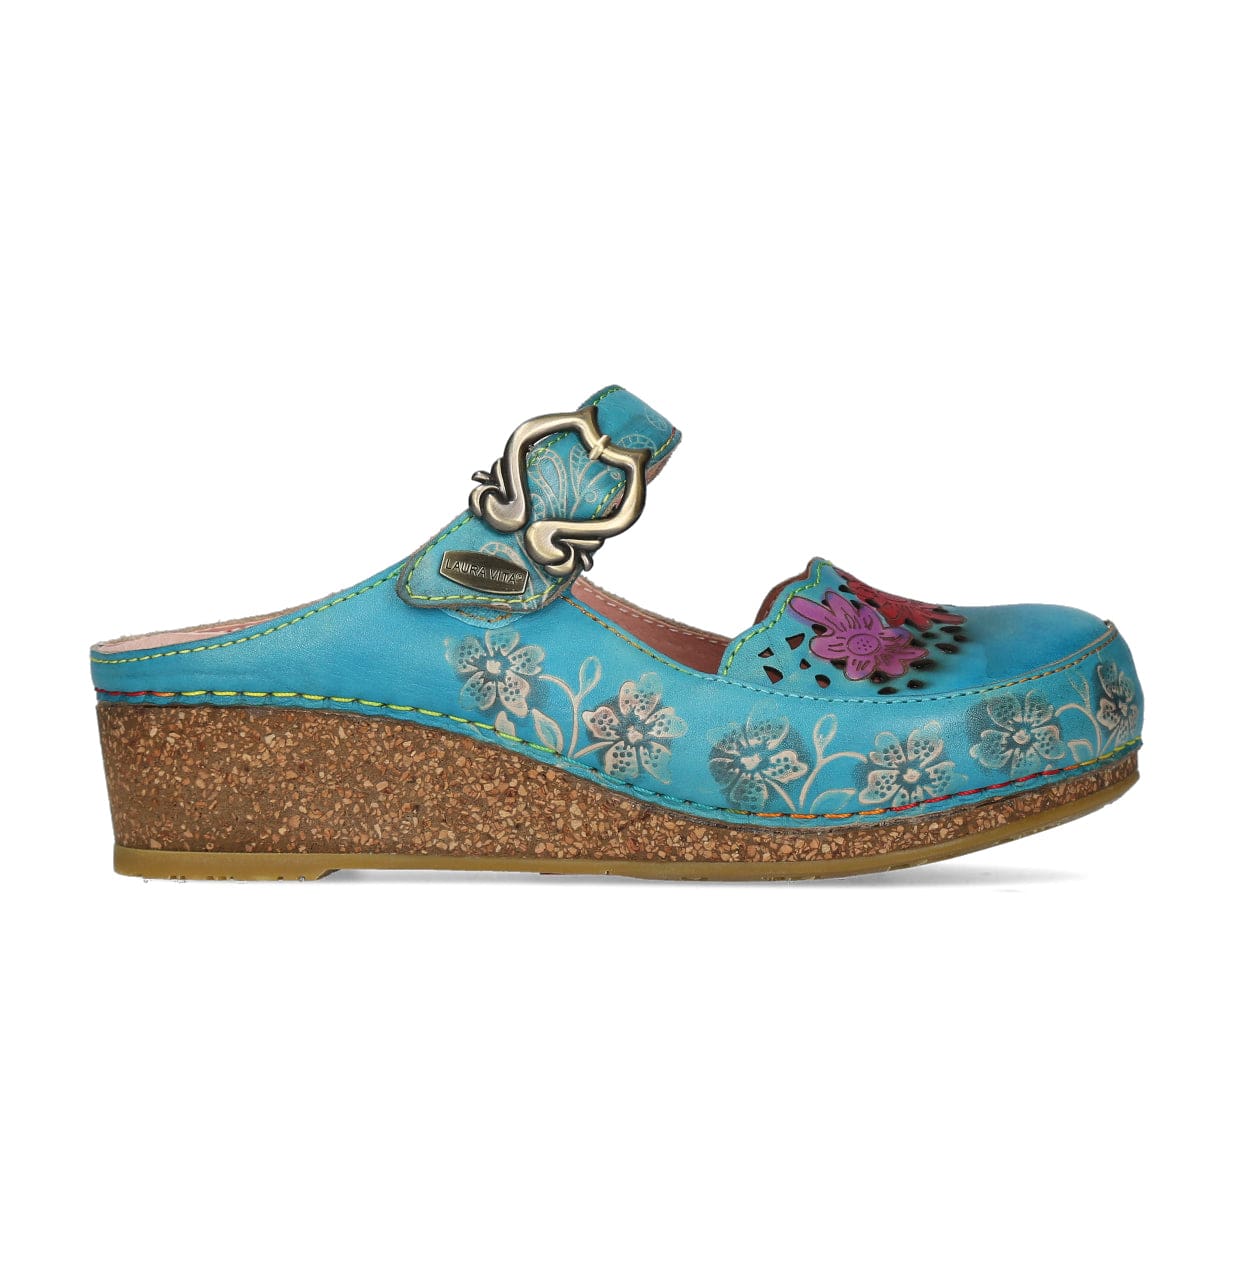 FACSCINEO Shoes 33 - 35 / Turquoise - Mule